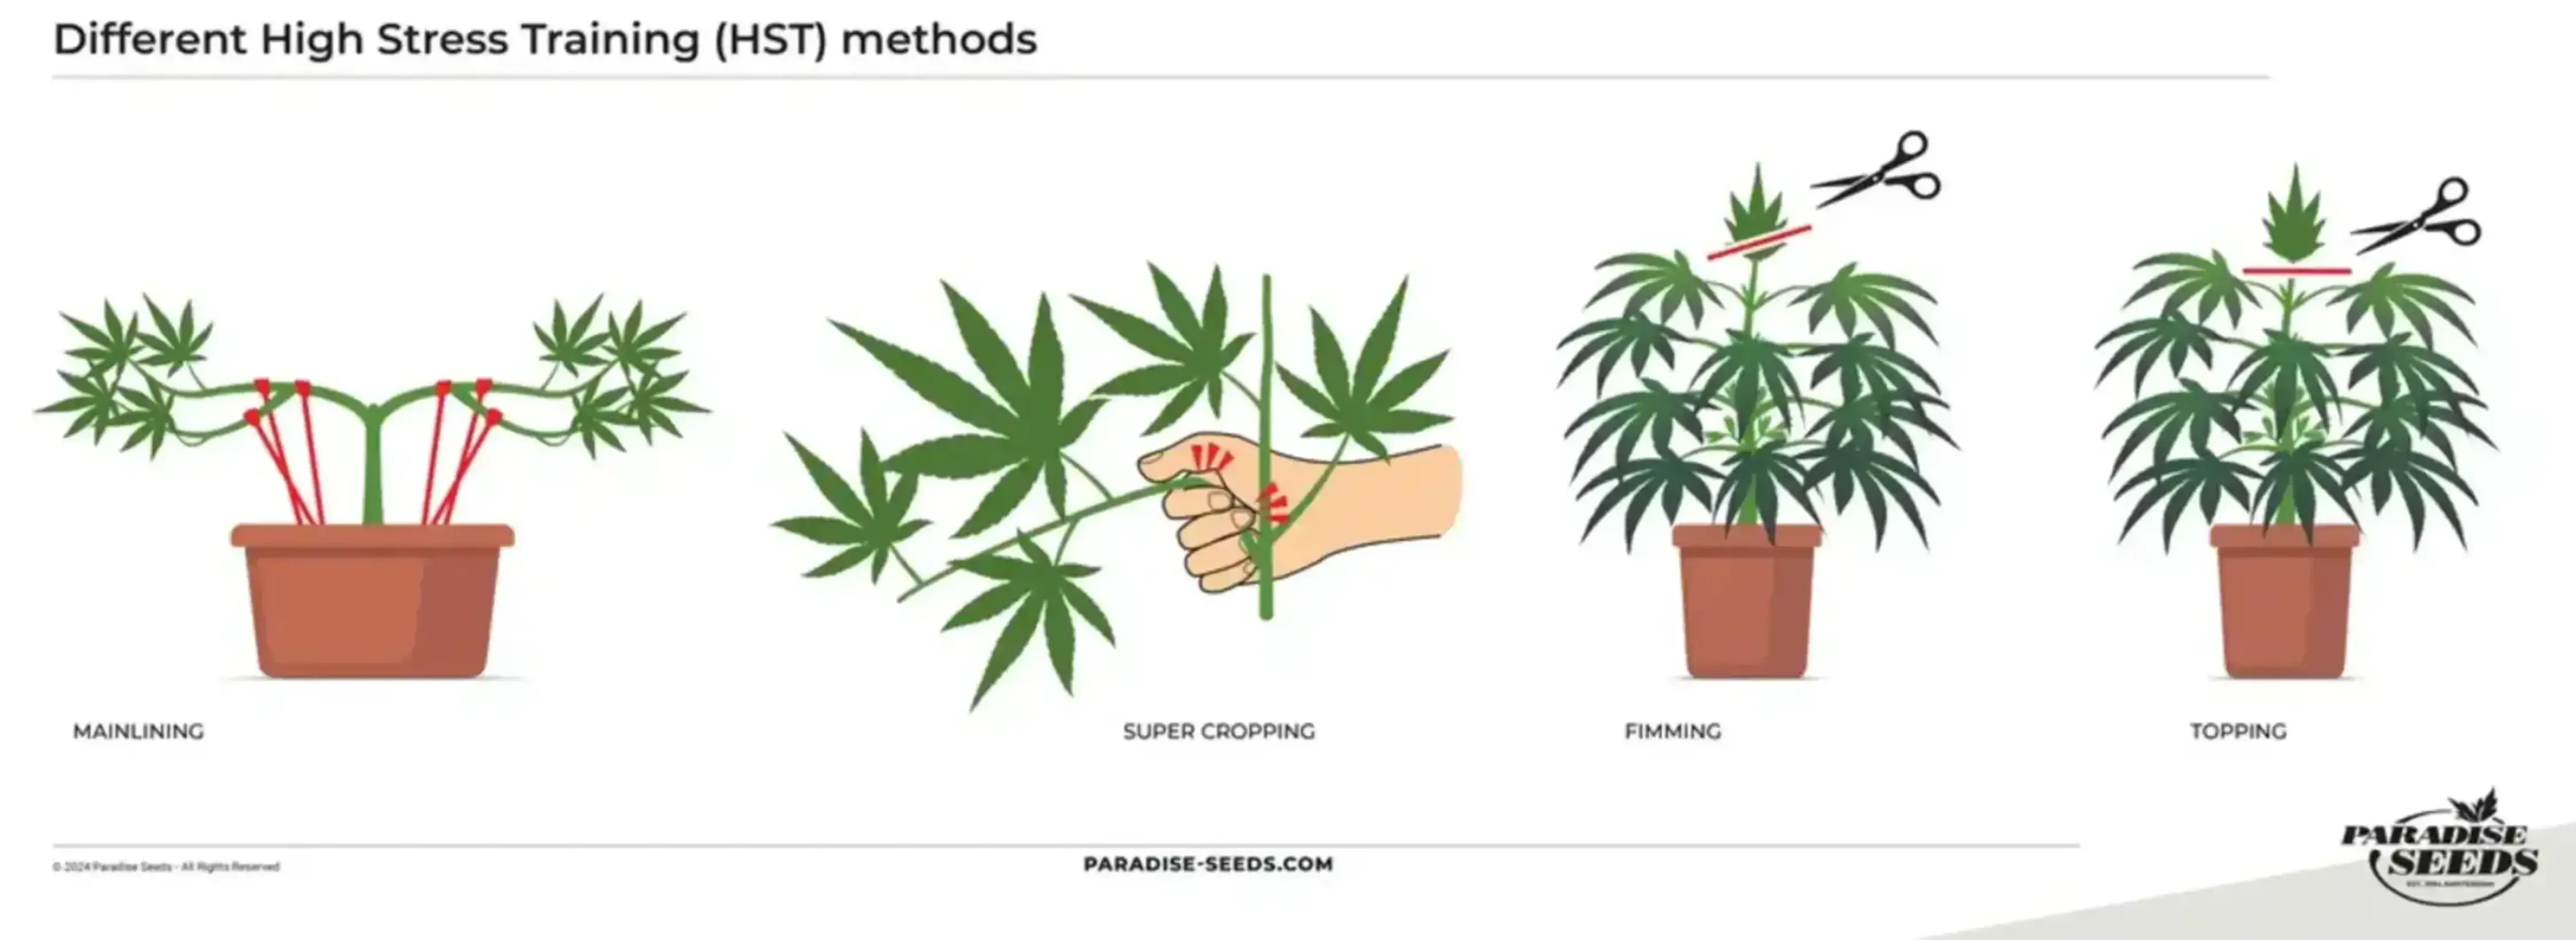 HST cannabis training techniques infographic.